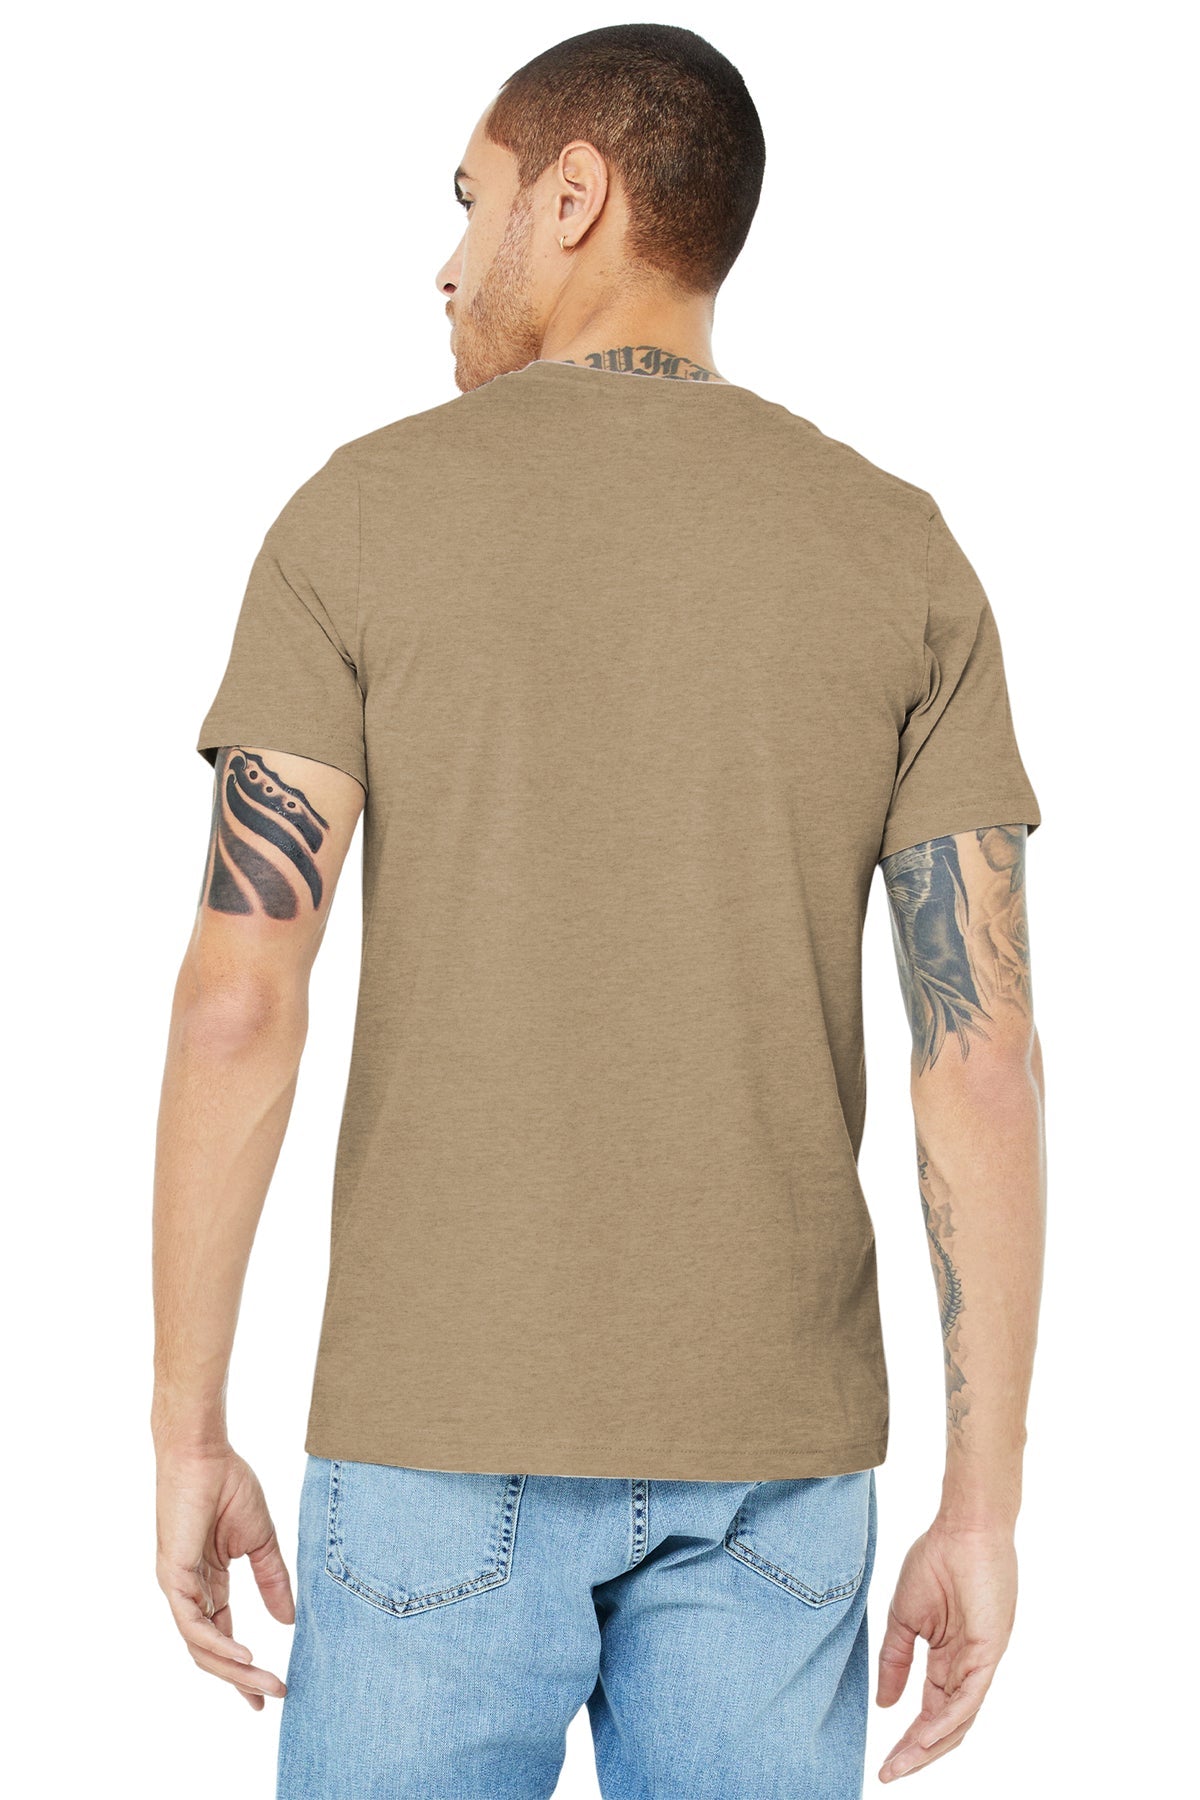 bella + canvas unisex jersey short sleeve t-shirt 3001c heather tan